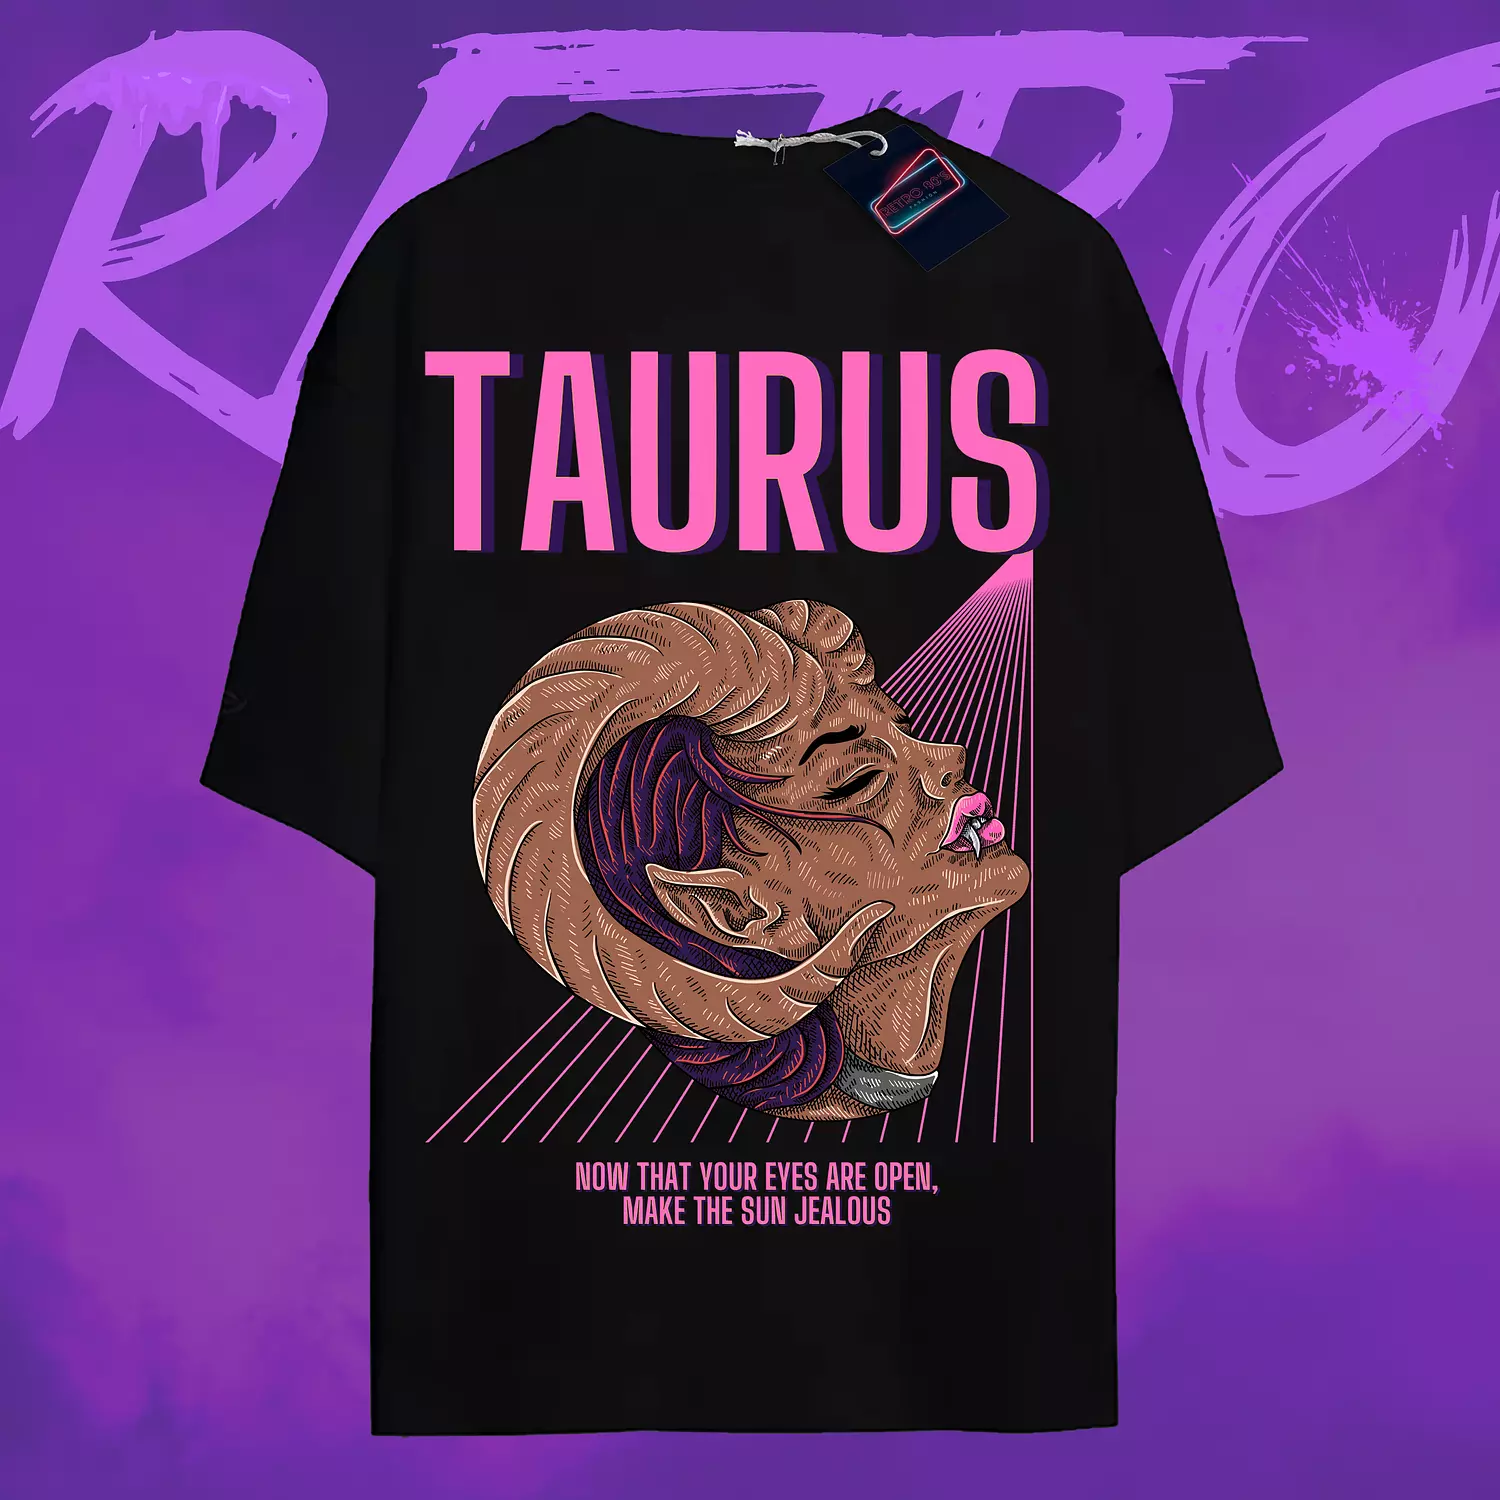 Taurus T-shirt hover image